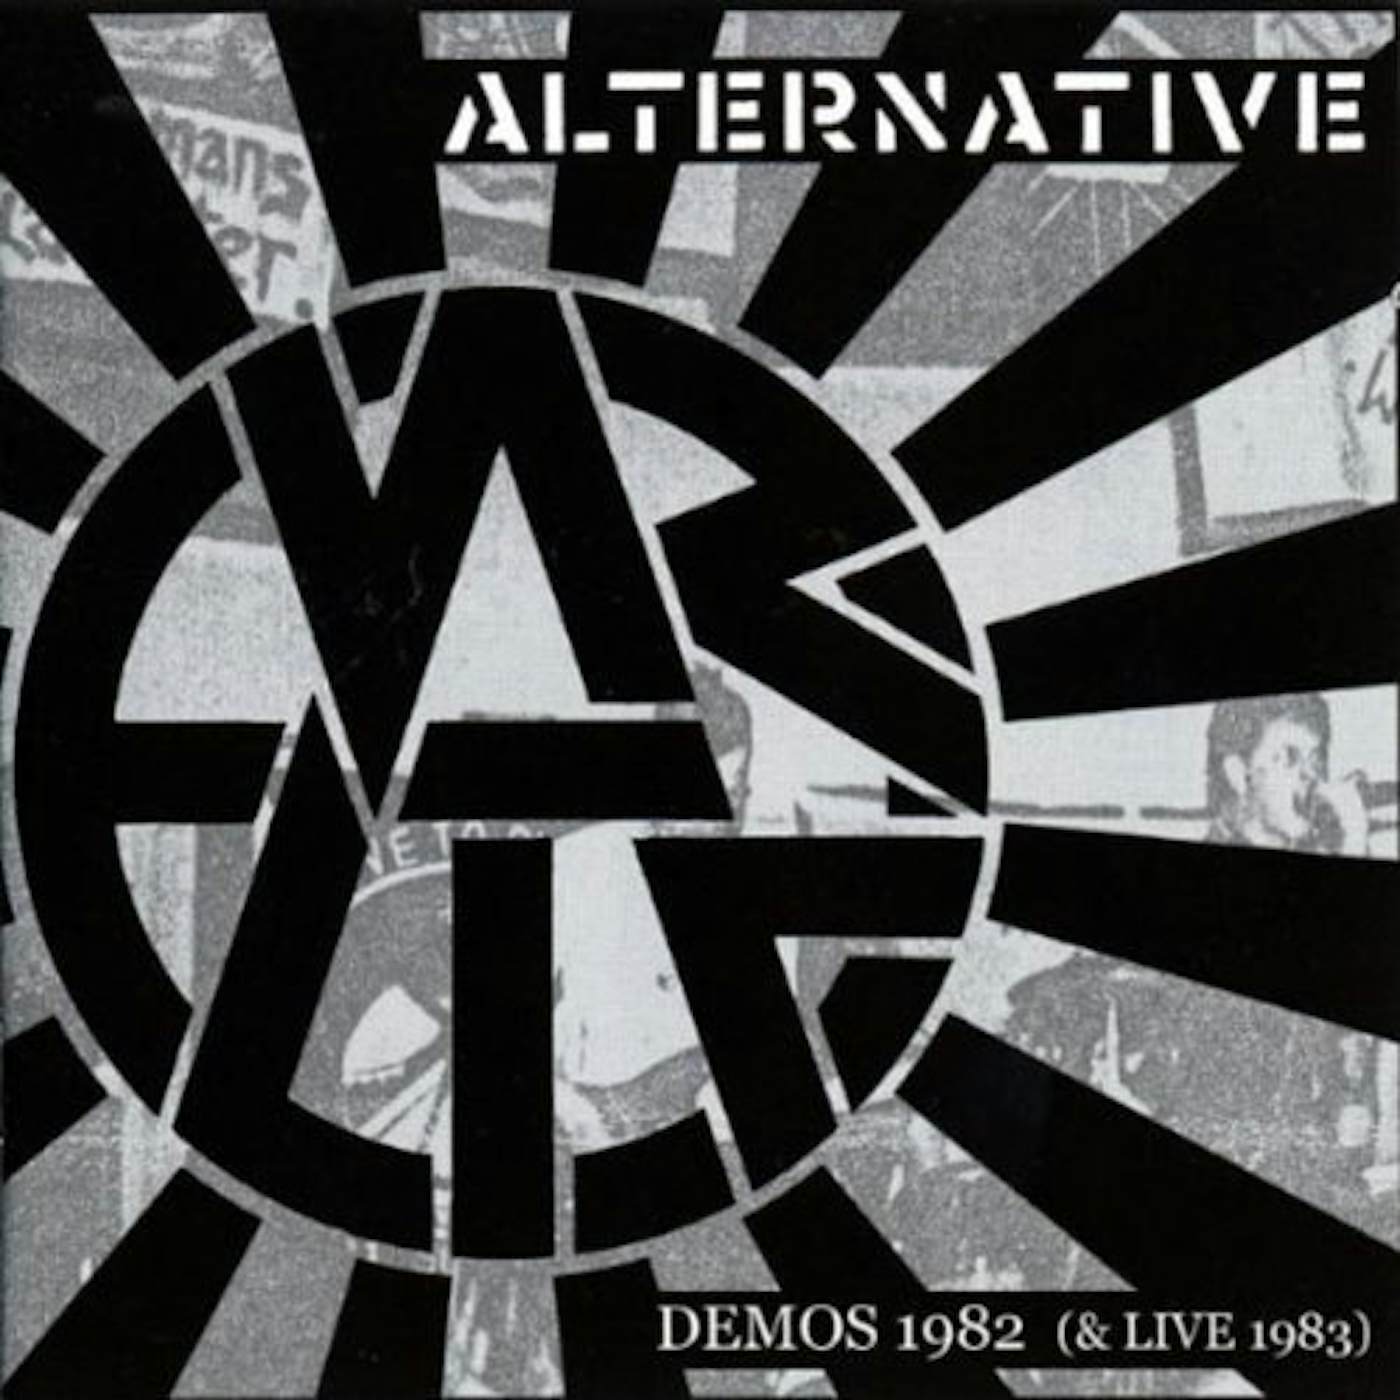 Alternative DEMOS 1982 (&LIVE 1983) CD